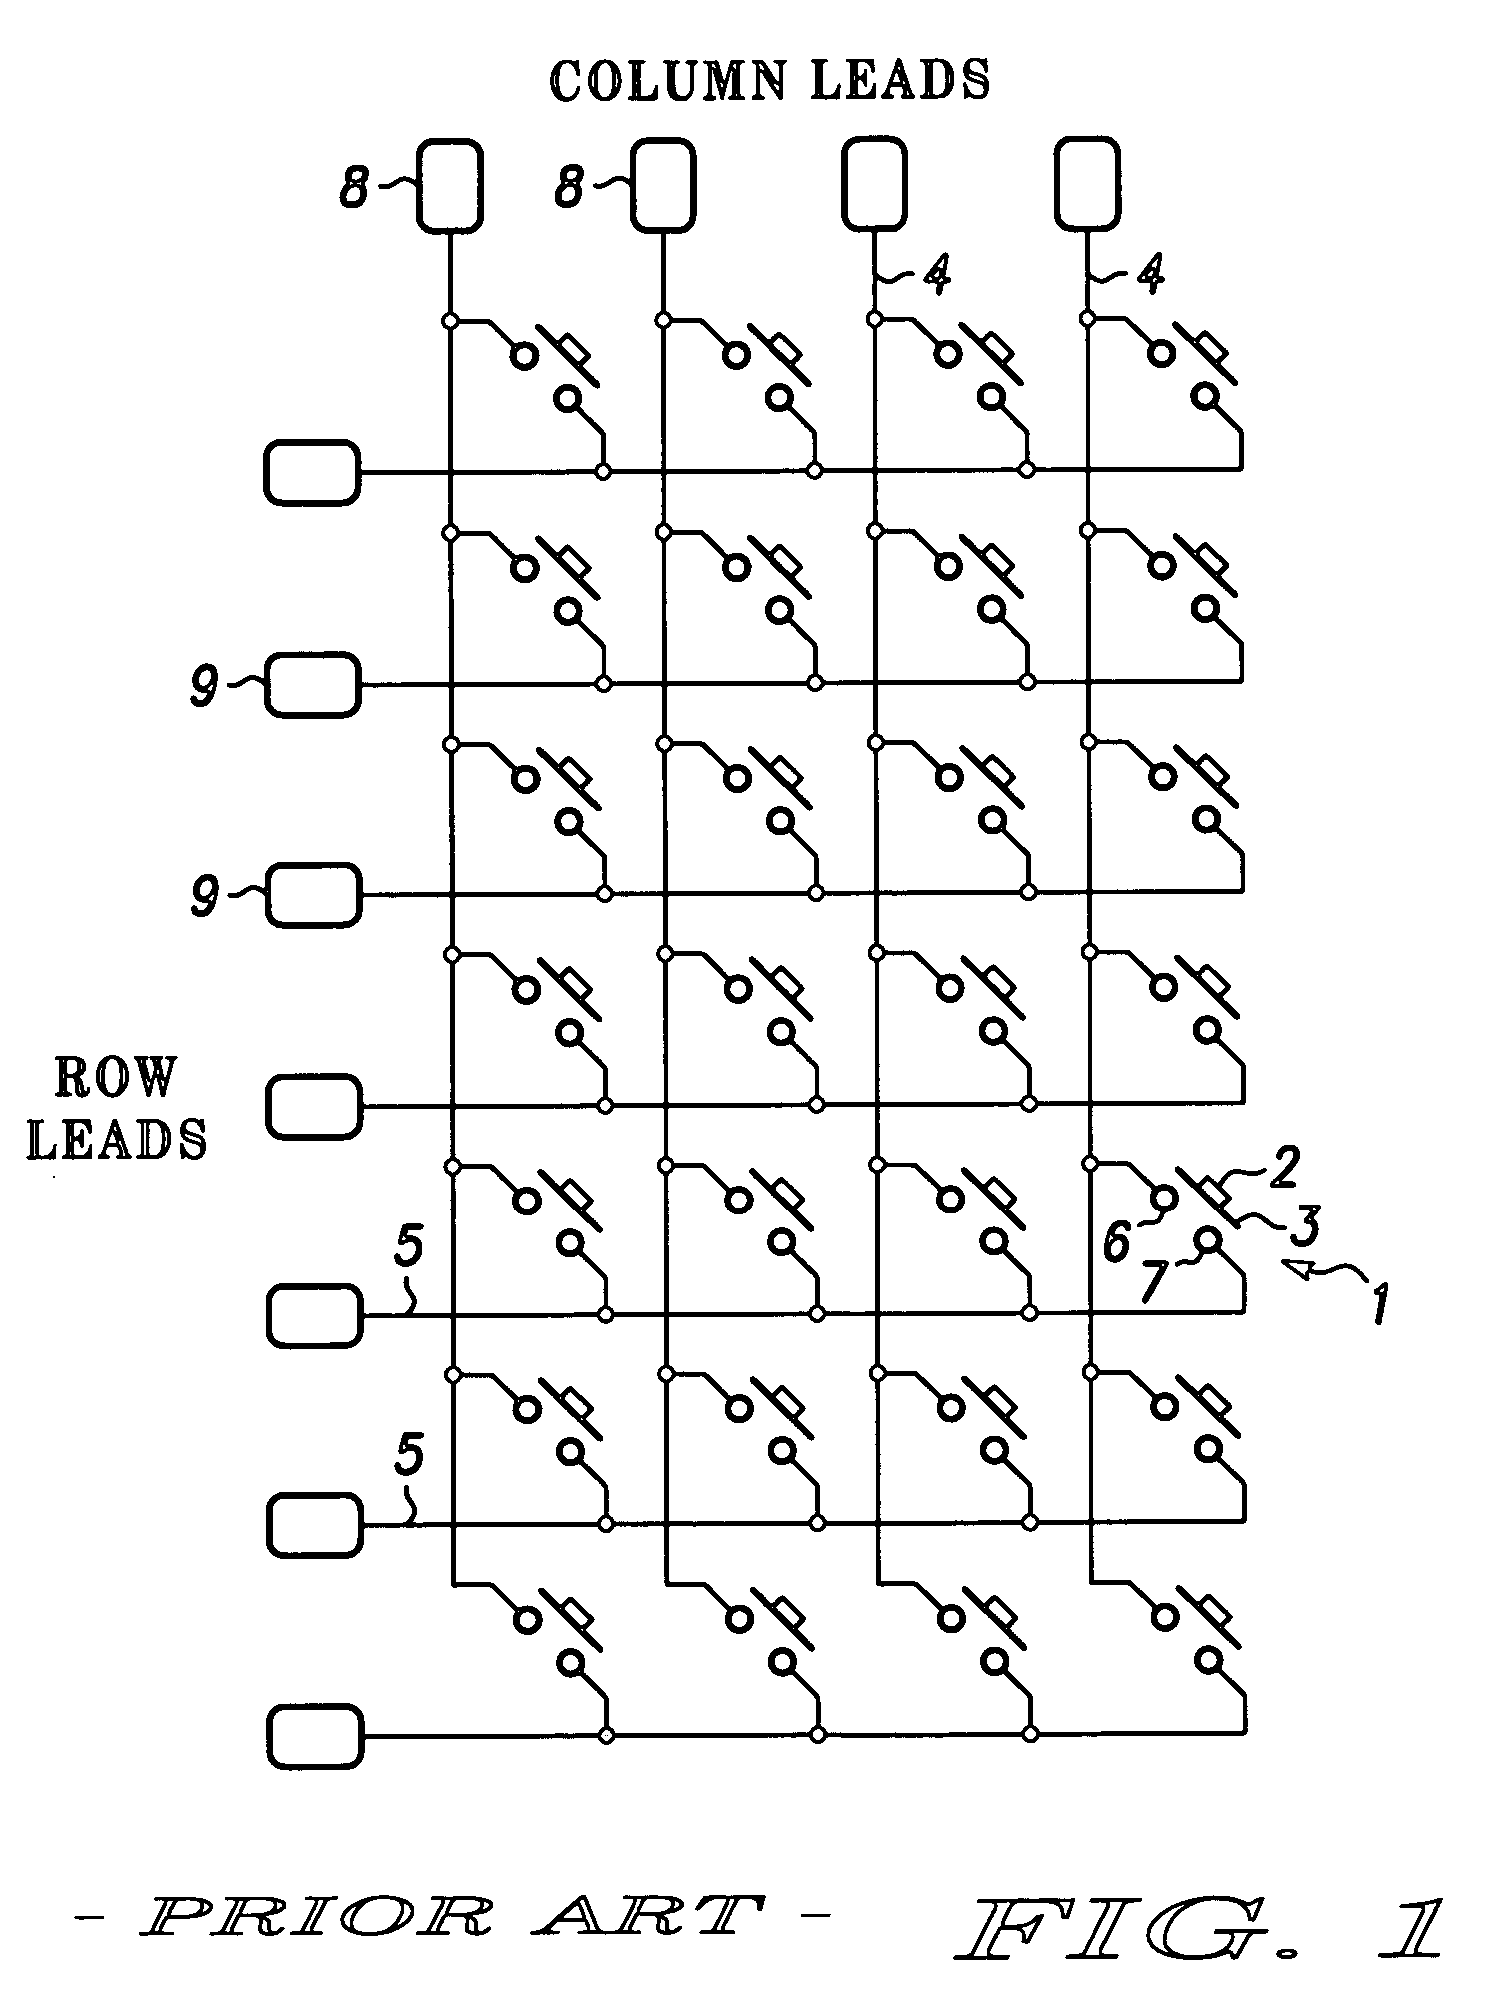 Keypad signal input apparatus